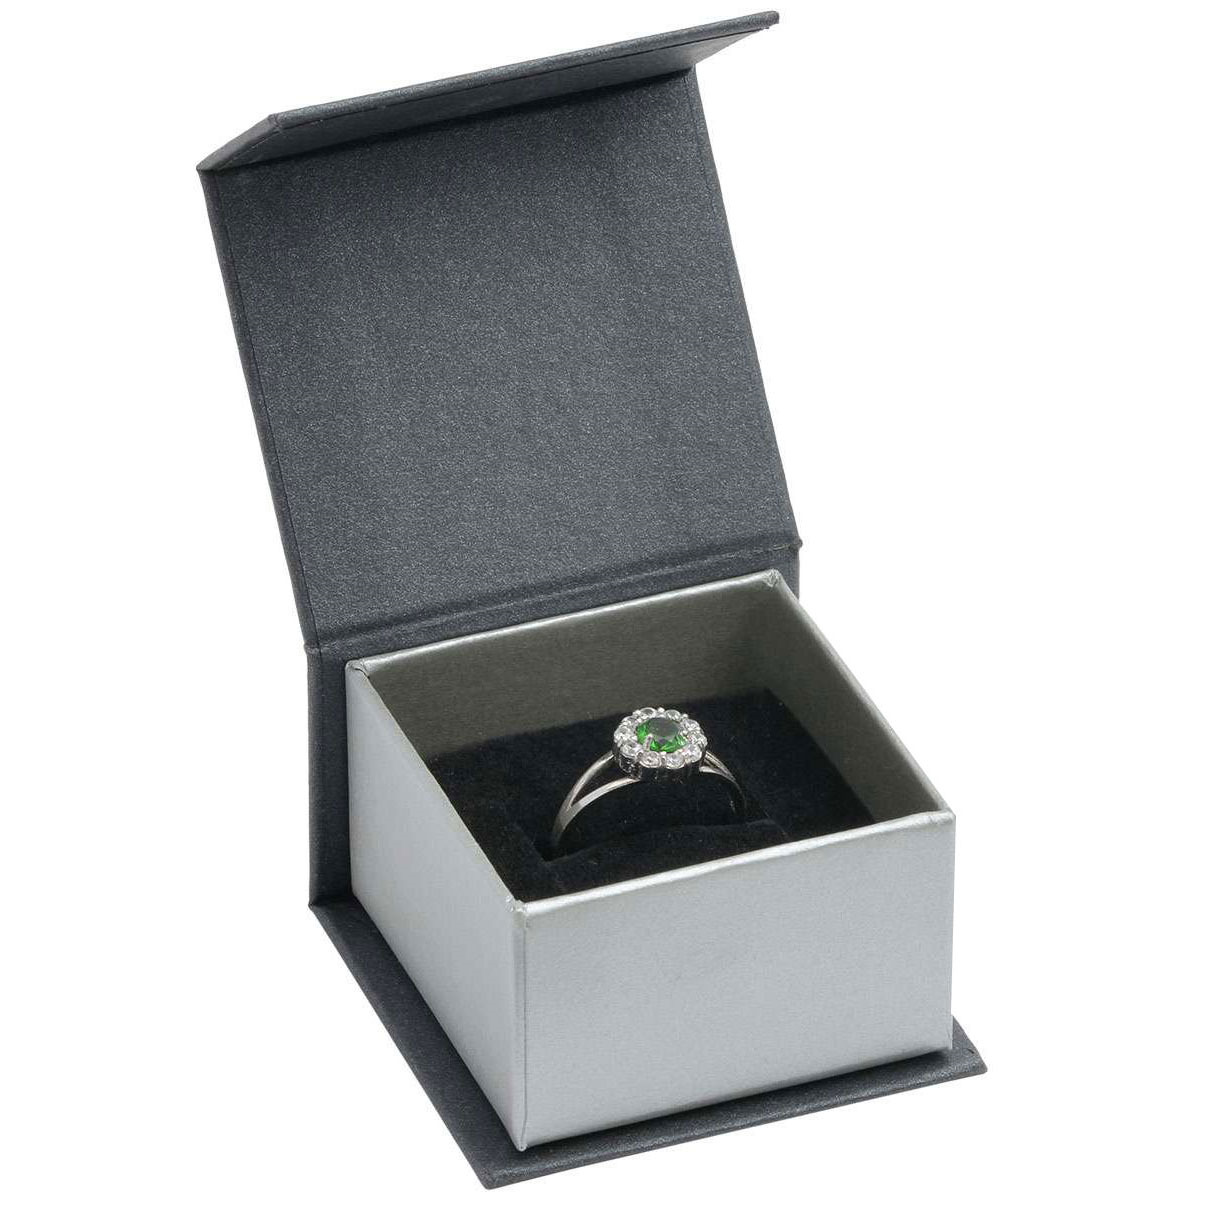 Šperky4U Dárková krabička na prsten modrá/bílá - KR0530